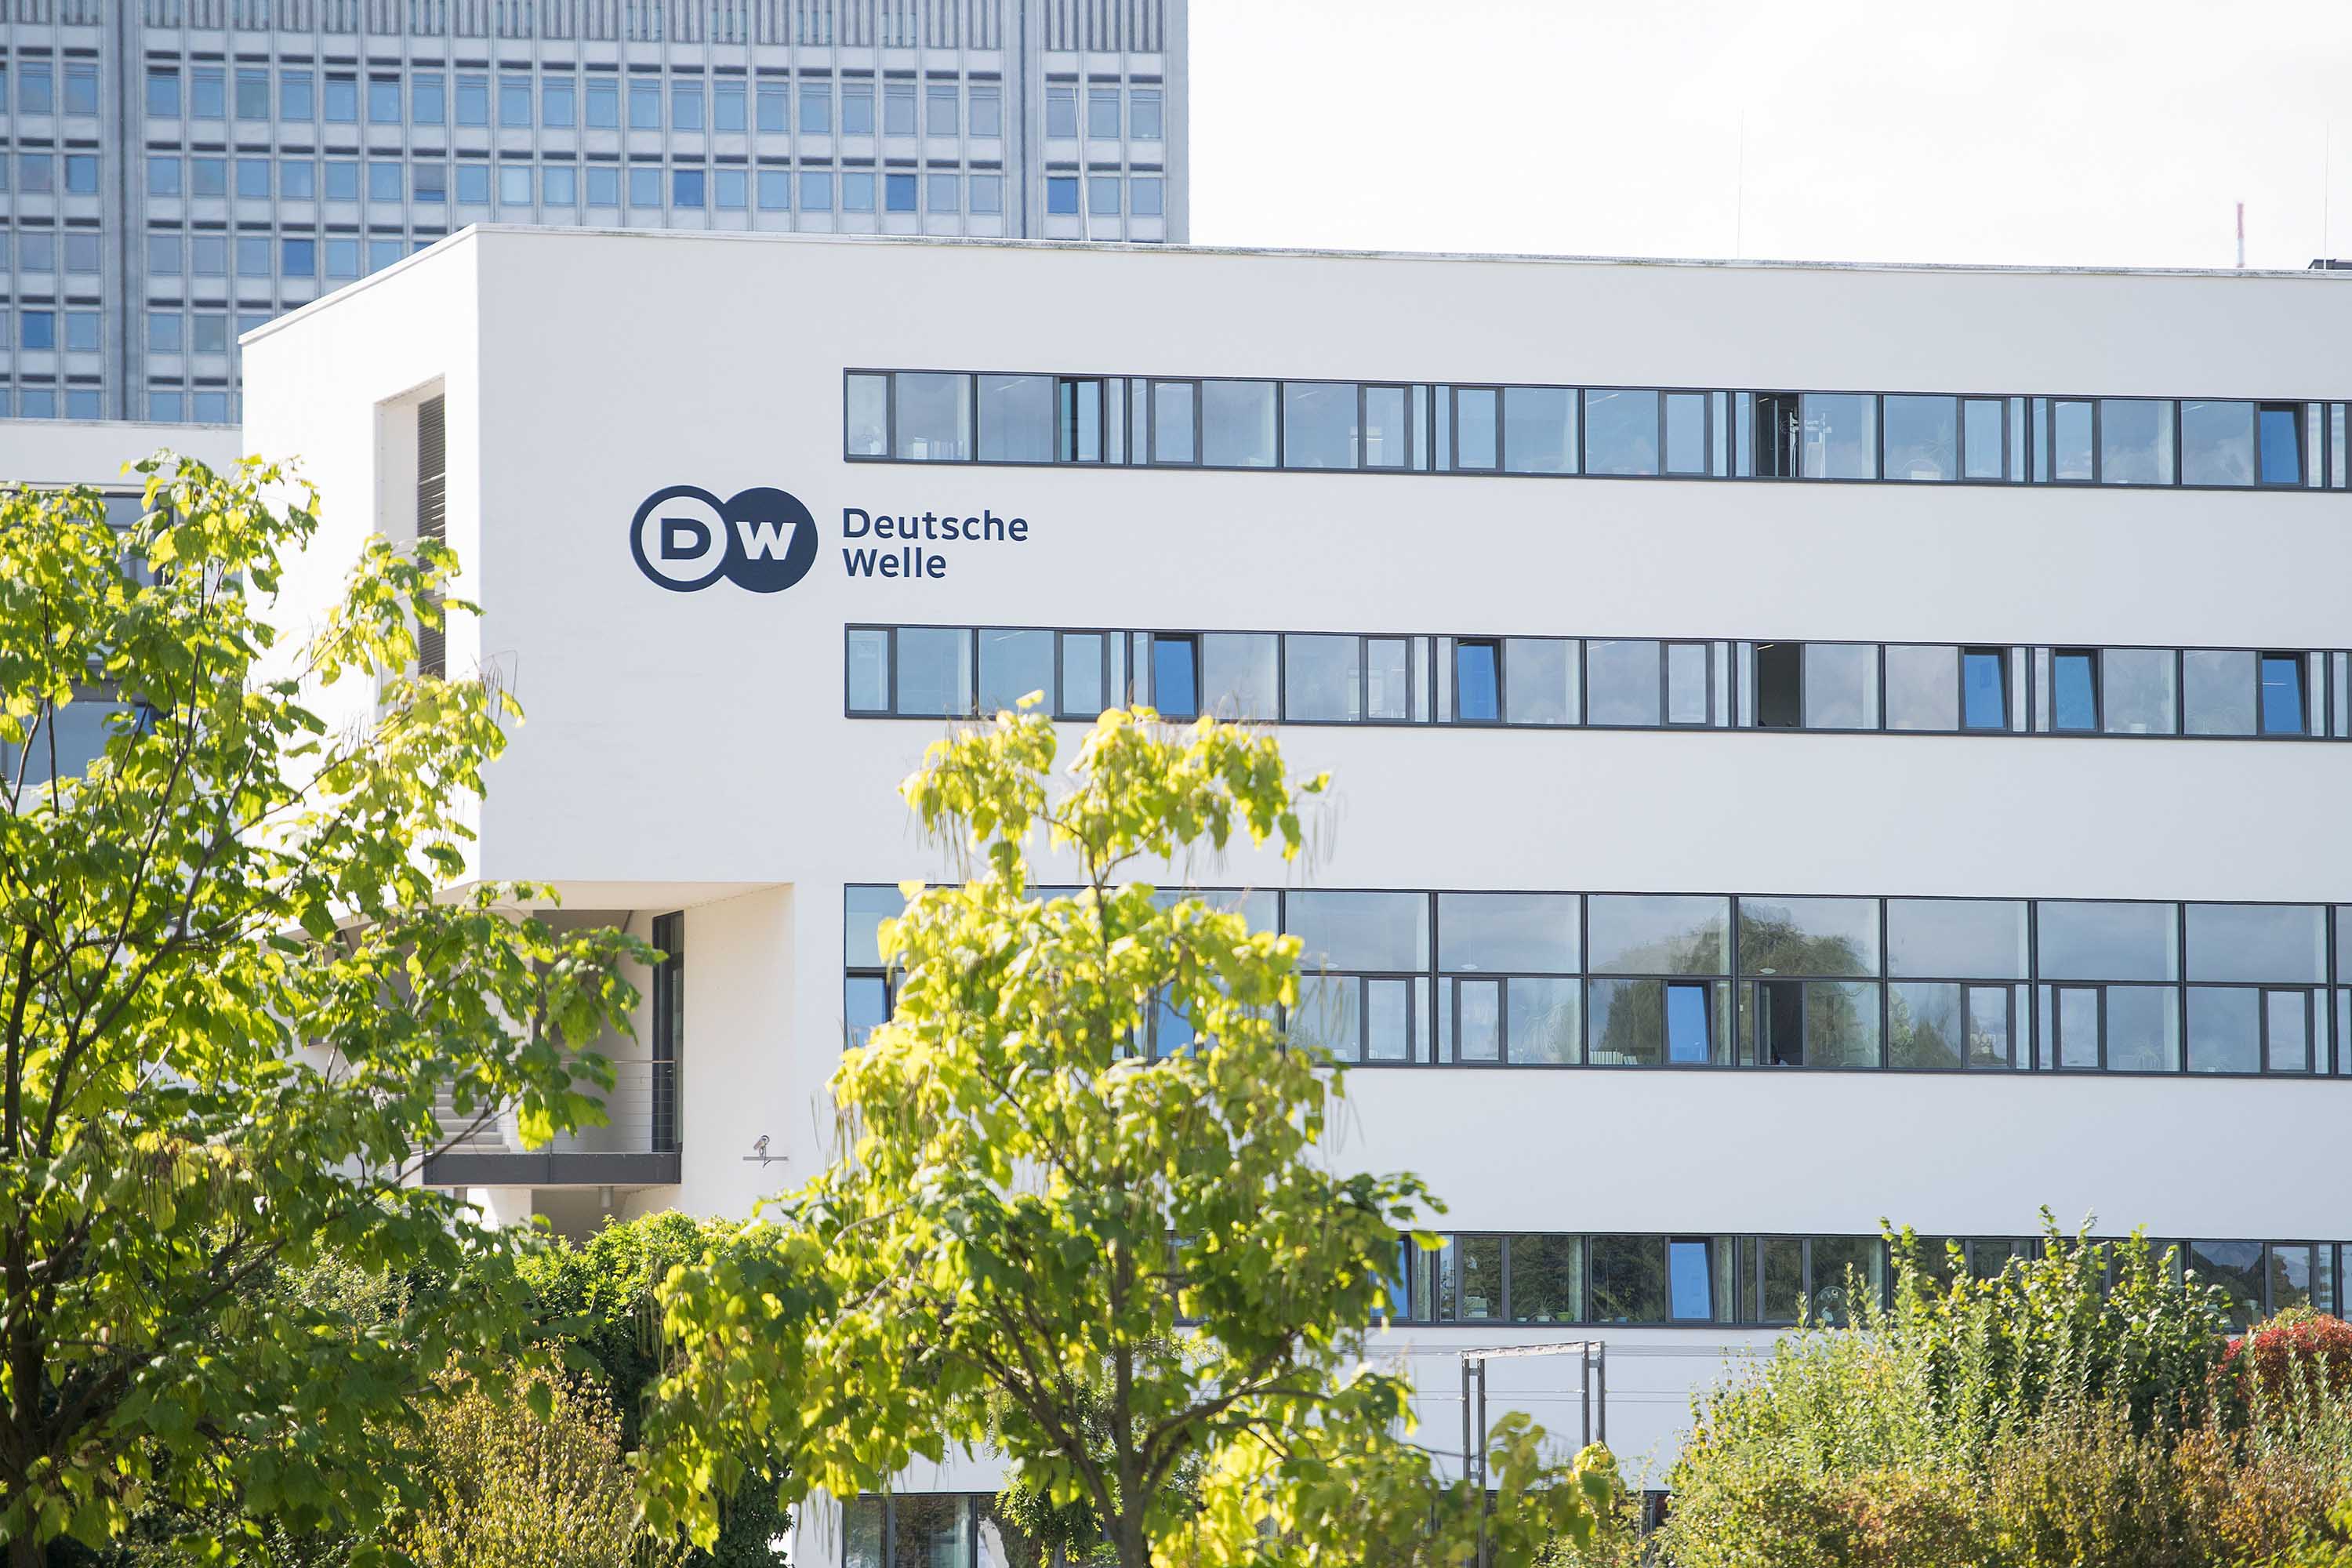 The head office of German international broadcaster Deutsche Welle (DW) is pictured in Bonn, Germany, in September 2016. 